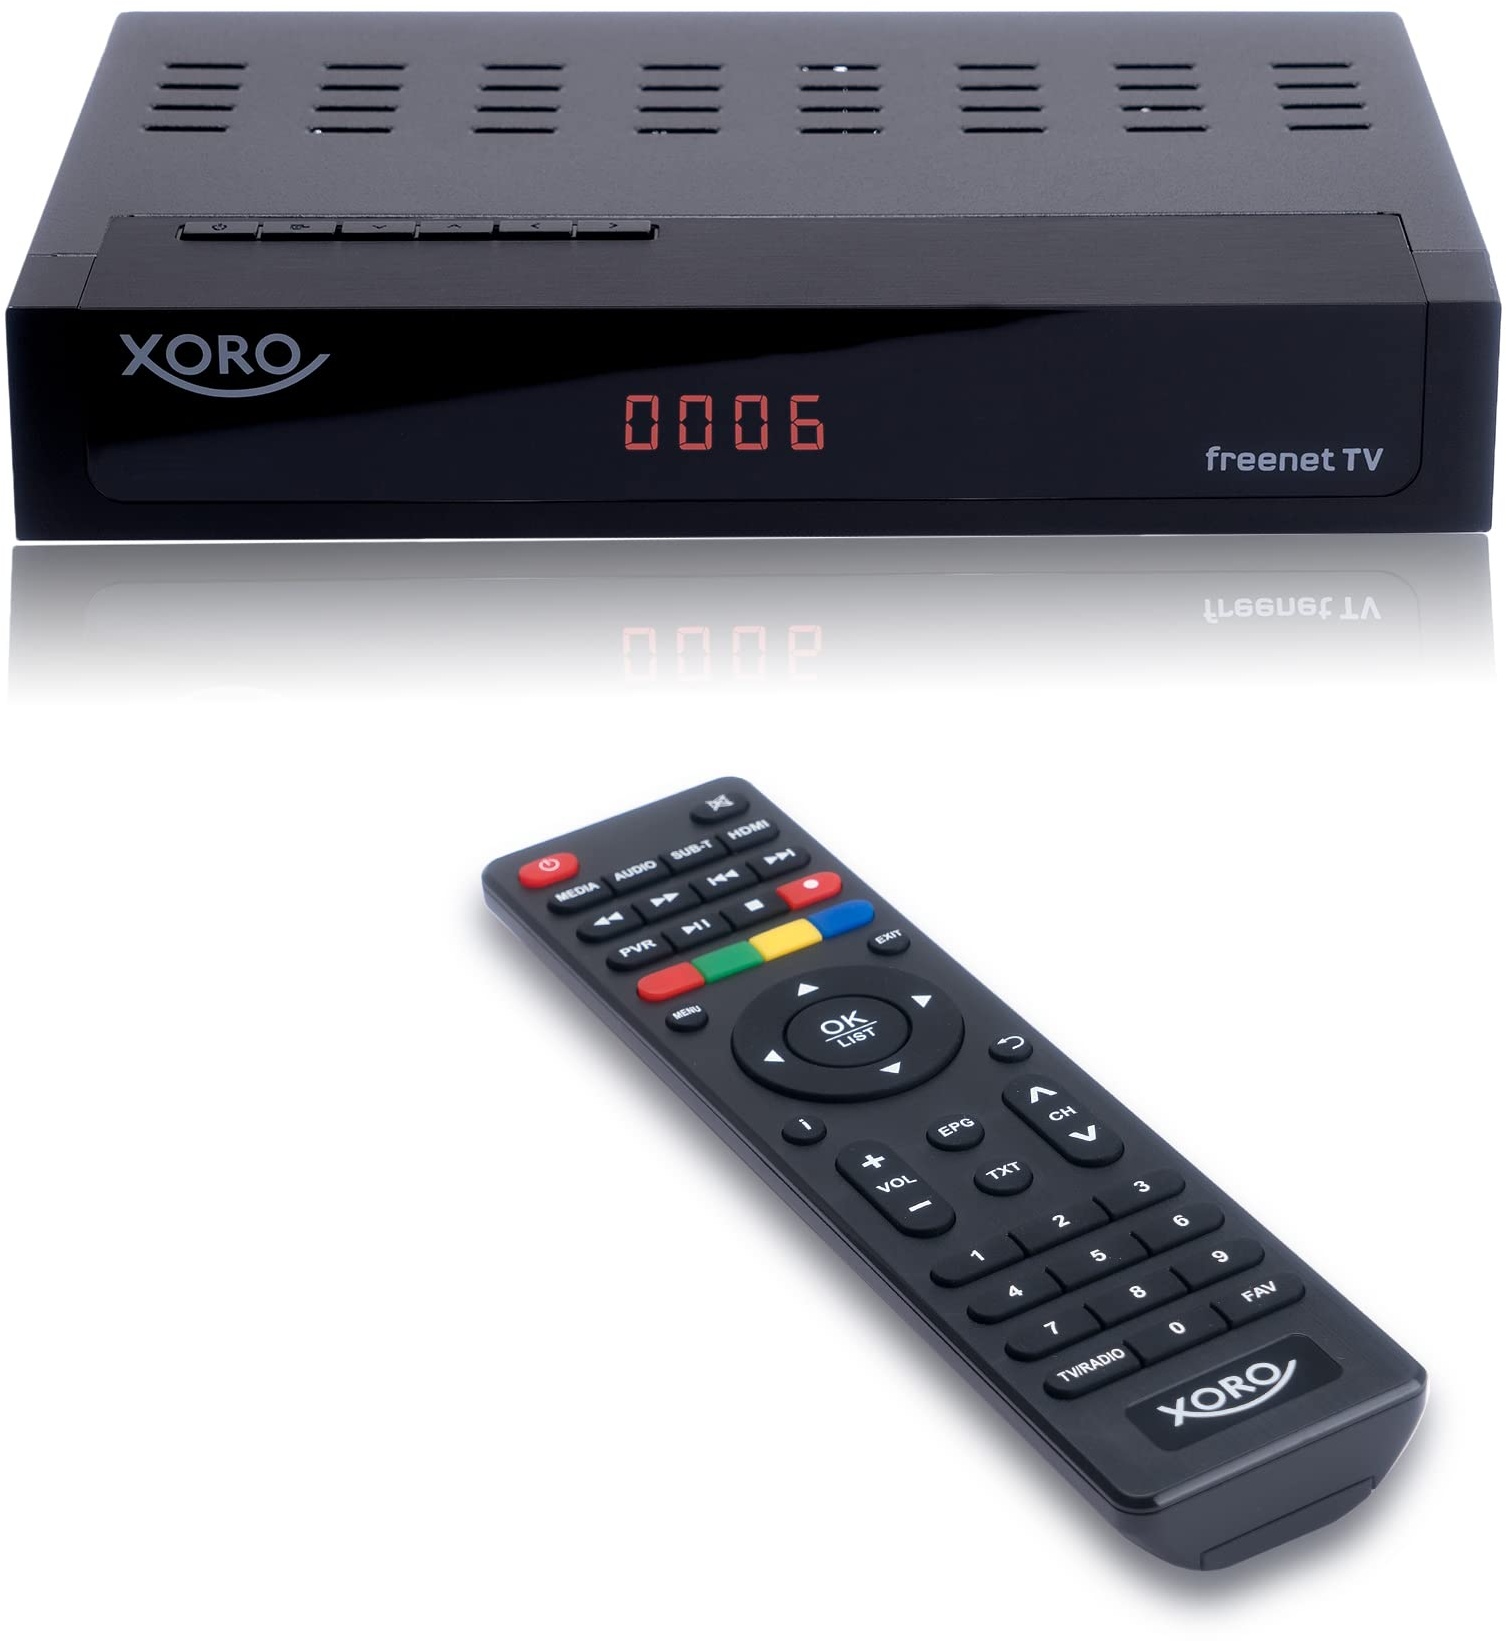 XORO HRT 8770 TWIN - DVB-T2 FullHD Receiver, integriertes Freenet TV Entschlüsselungssystem, TWIN-Tuner (zwei Empfangsteile), PVR Ready, Timeshift, Mediaplayer